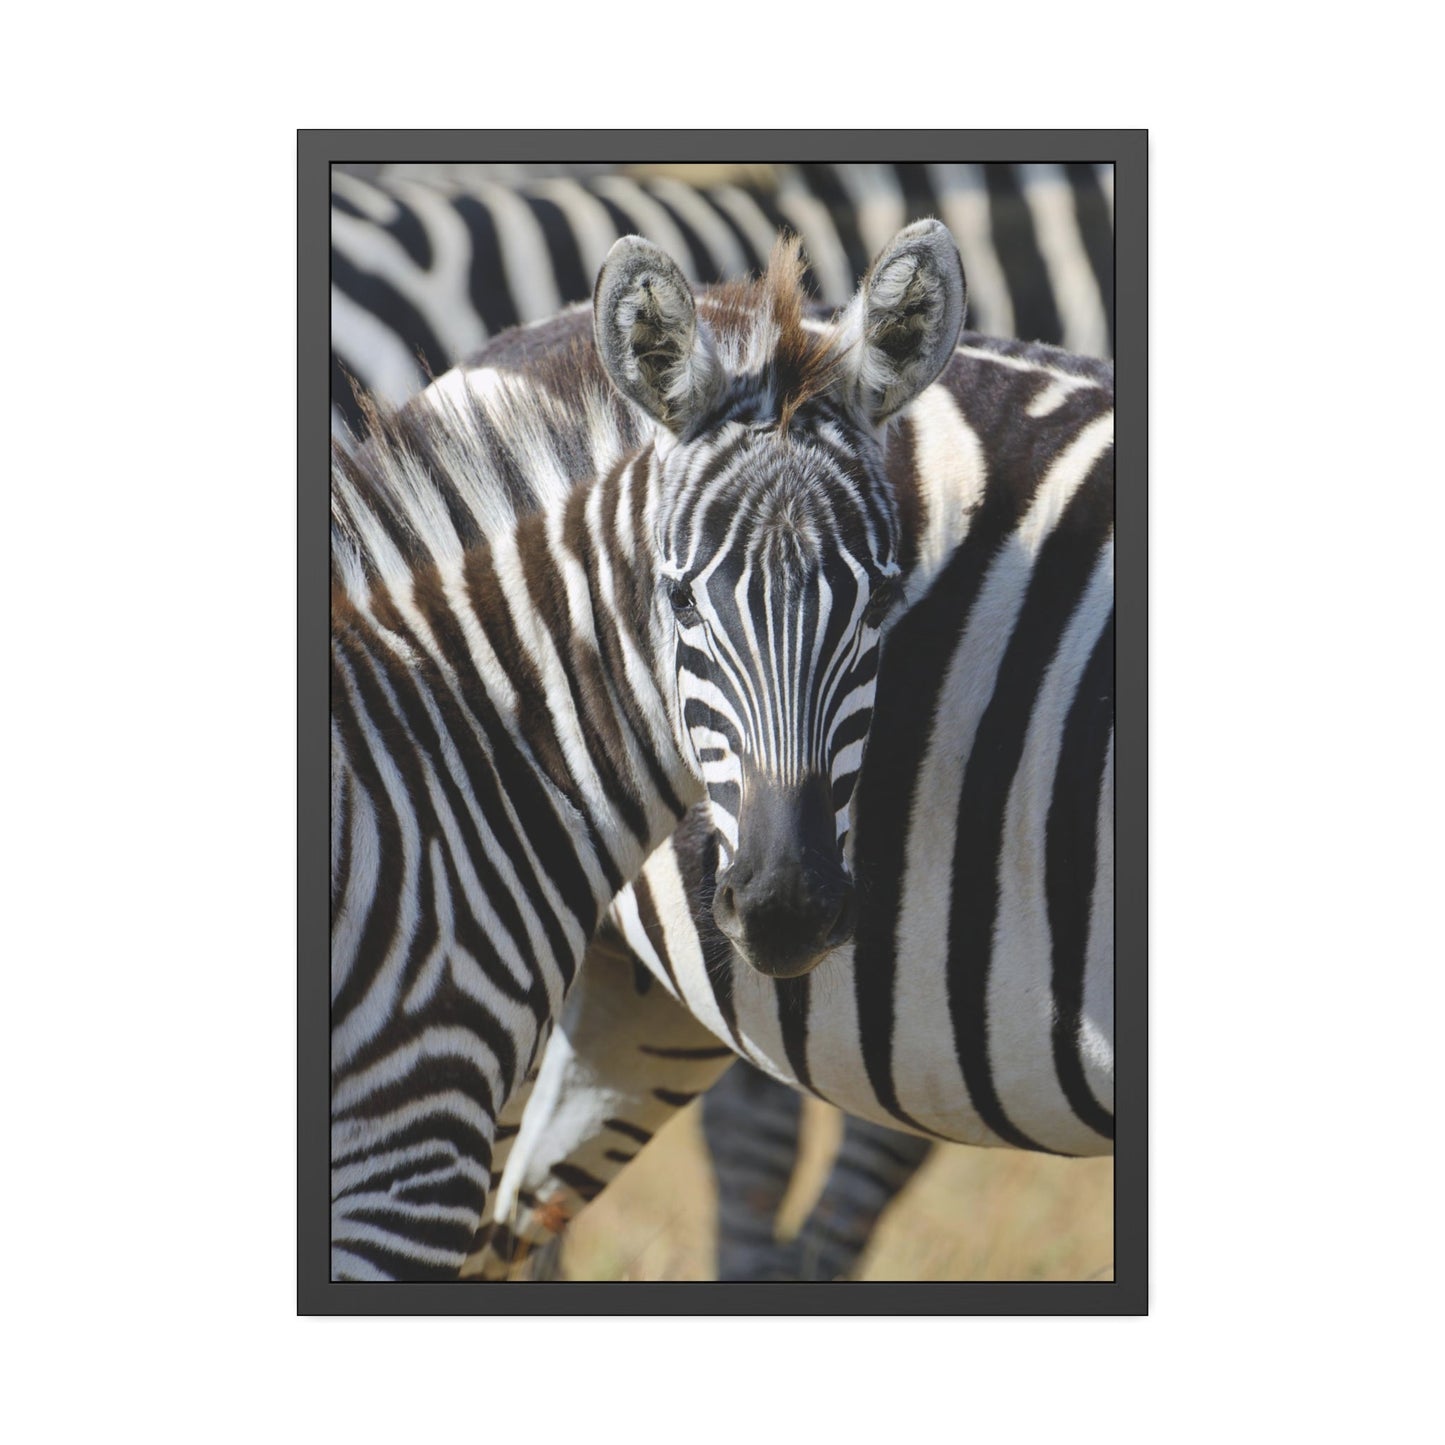 Grazing in the Grasslands: Natural Canvas Print of a Zebra in its Natural Habitat